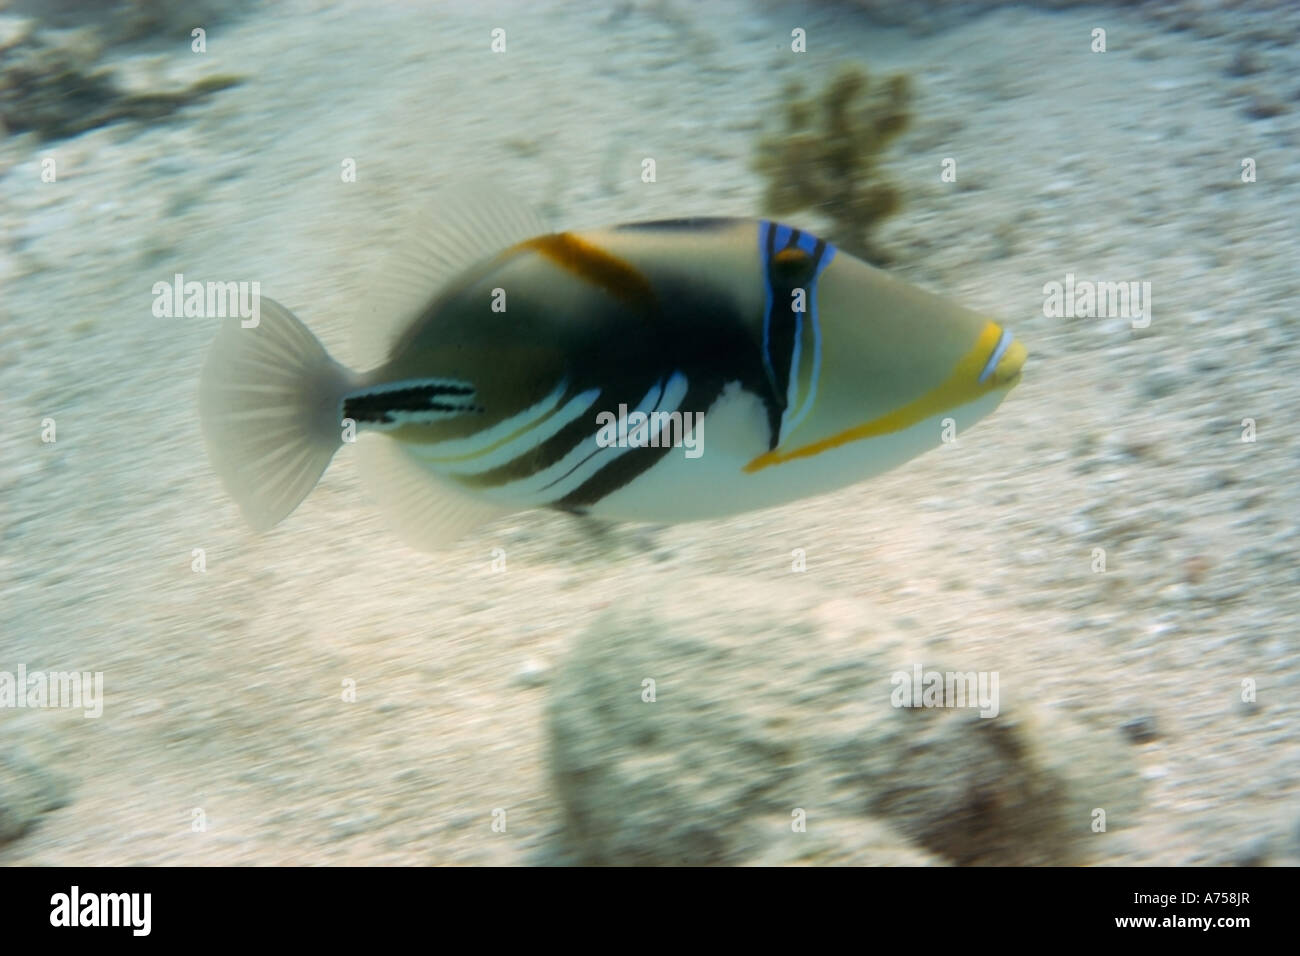 Picasso or blackbar triggerfish Rhinecanthus aculeatus Rongelap Atoll Marshall Islands Micronesia Stock Photo